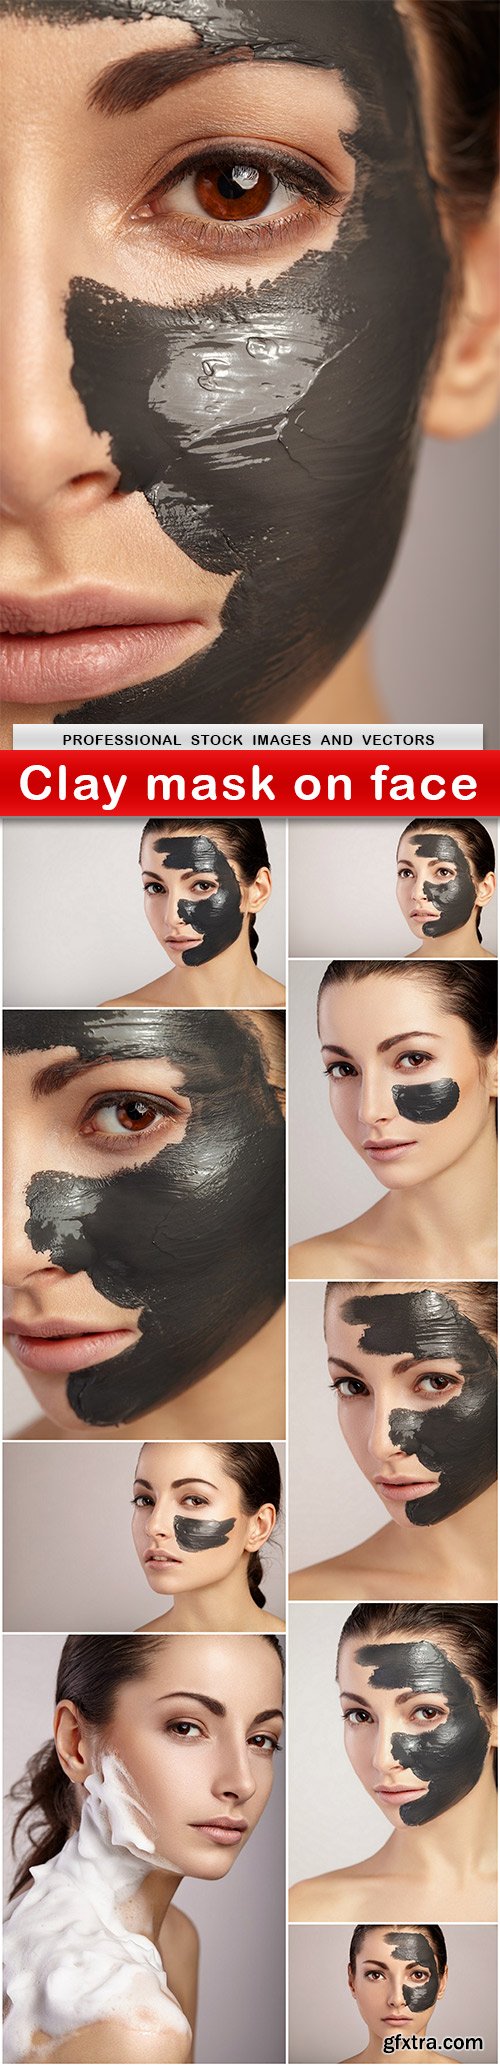 Clay mask on face - 10 UHQ JPEG